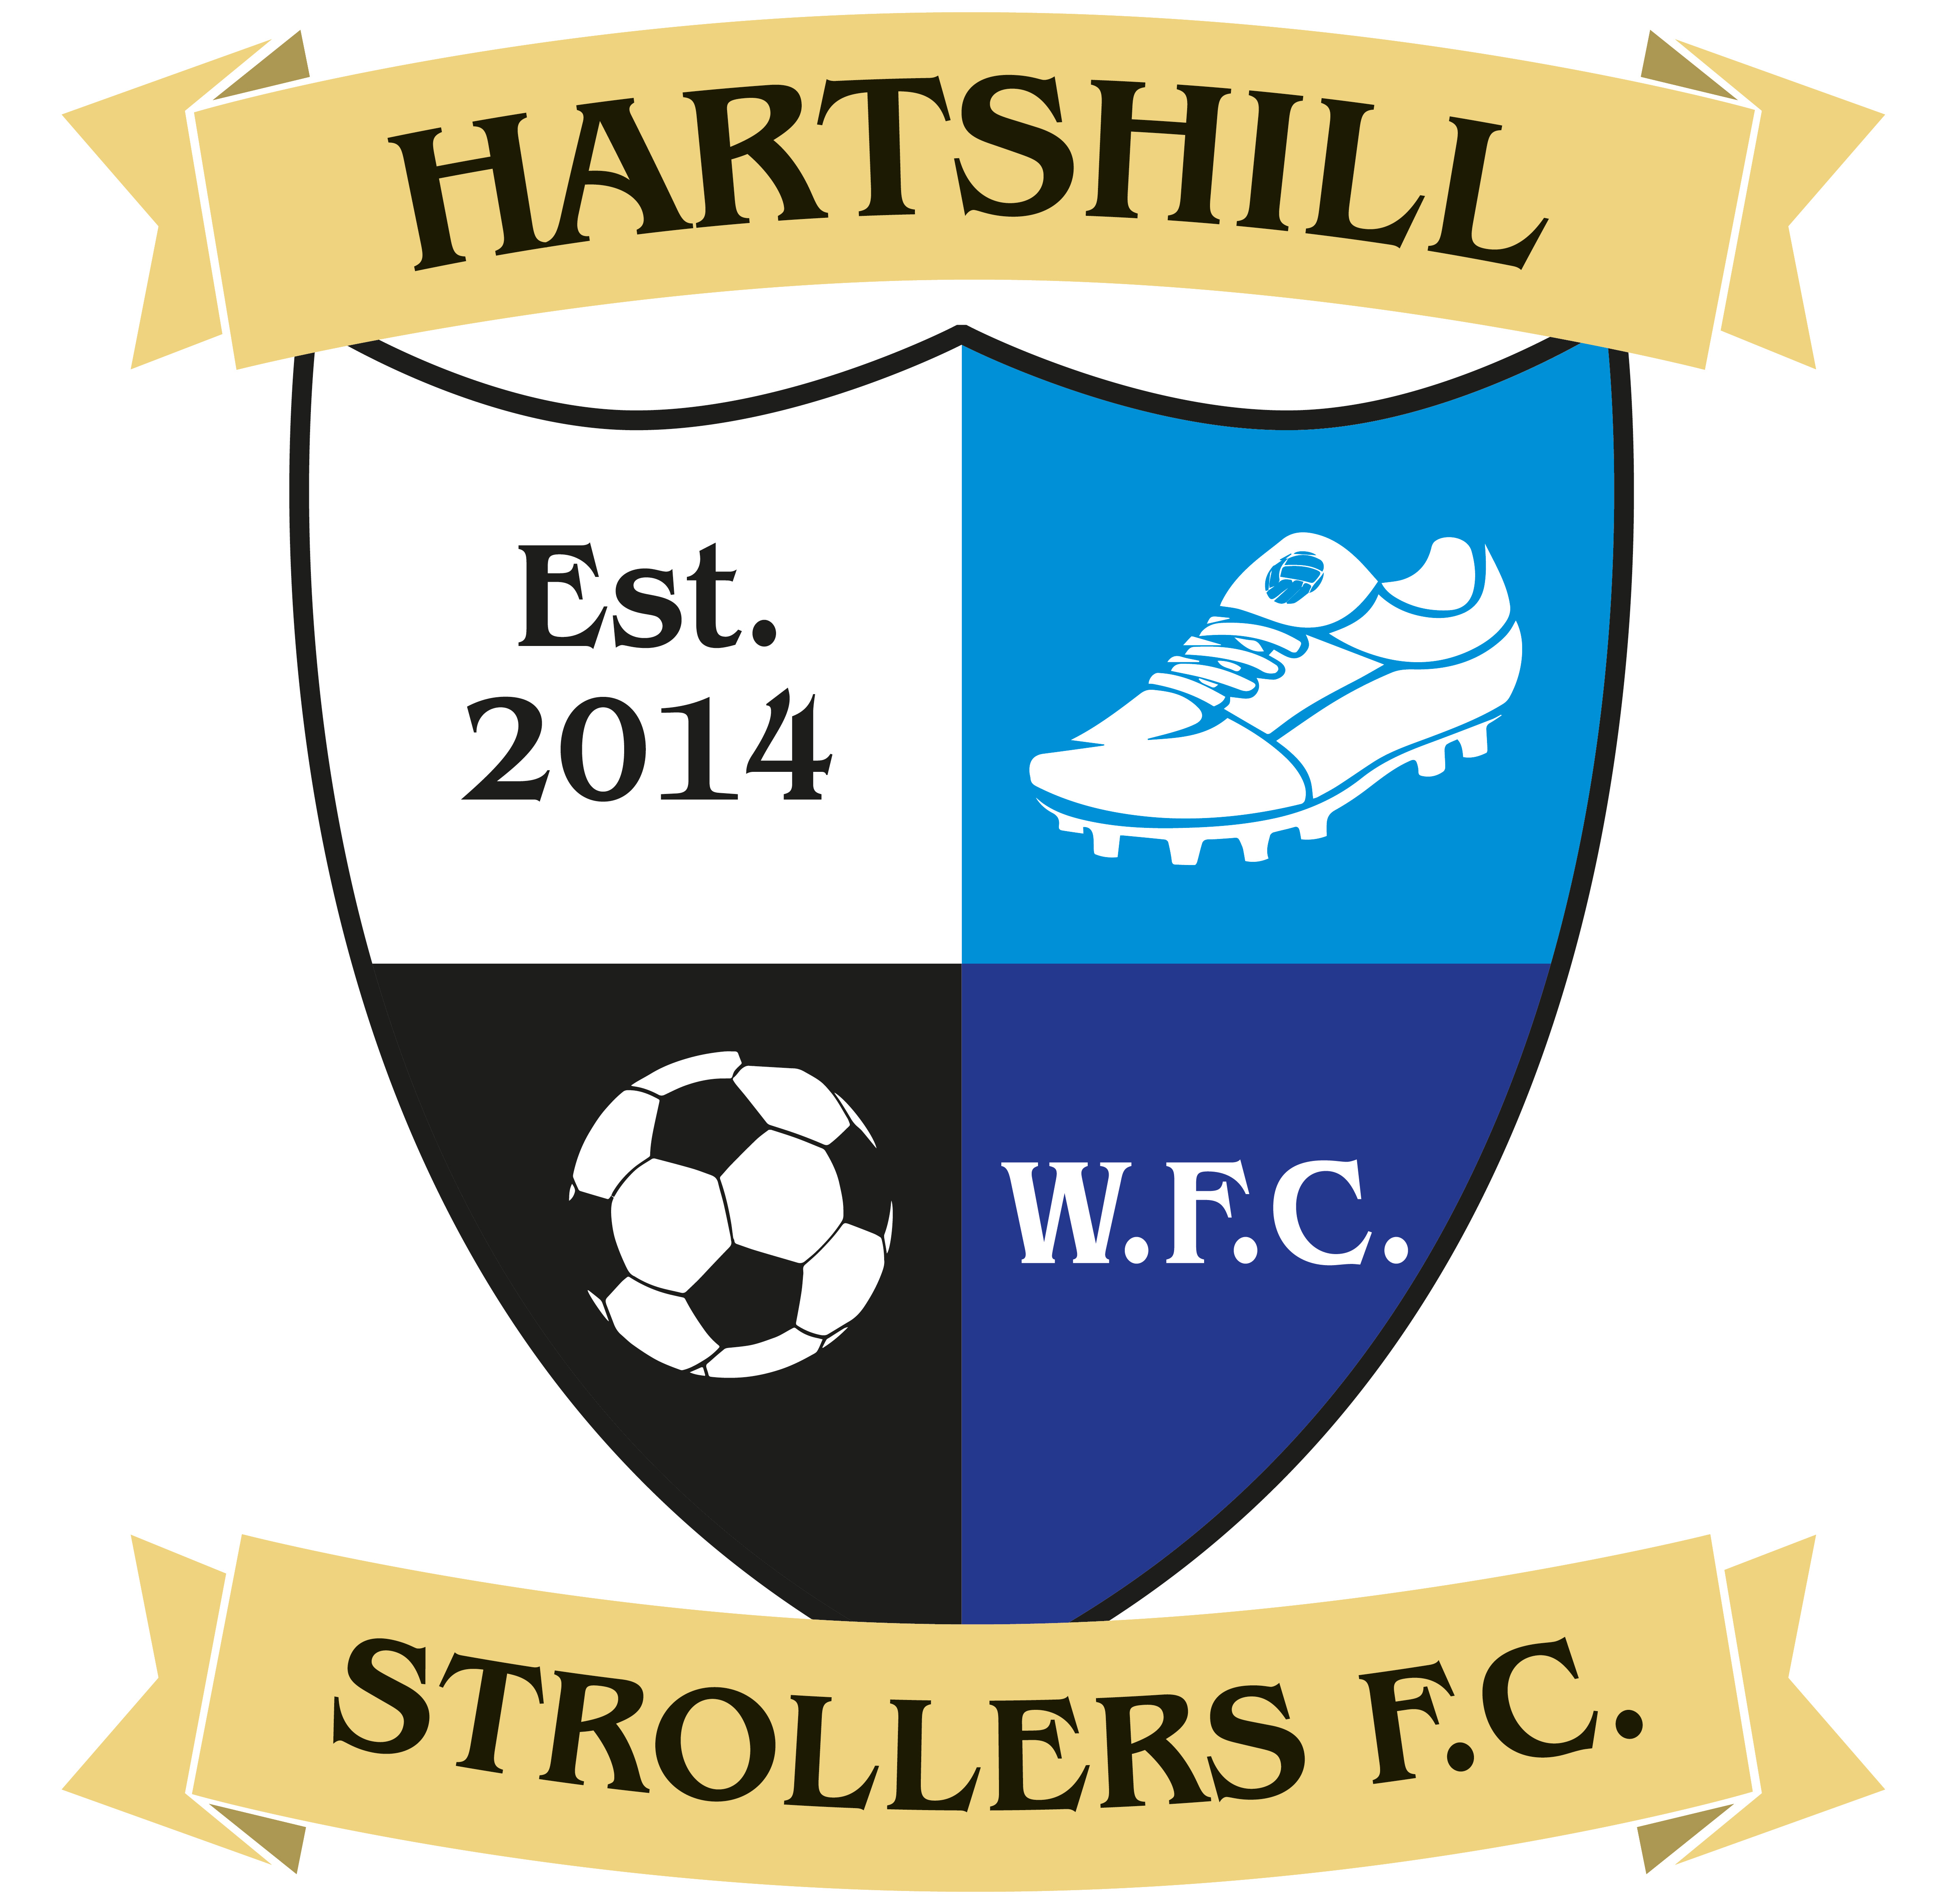 Hartshill Strollers - Walking Football Club